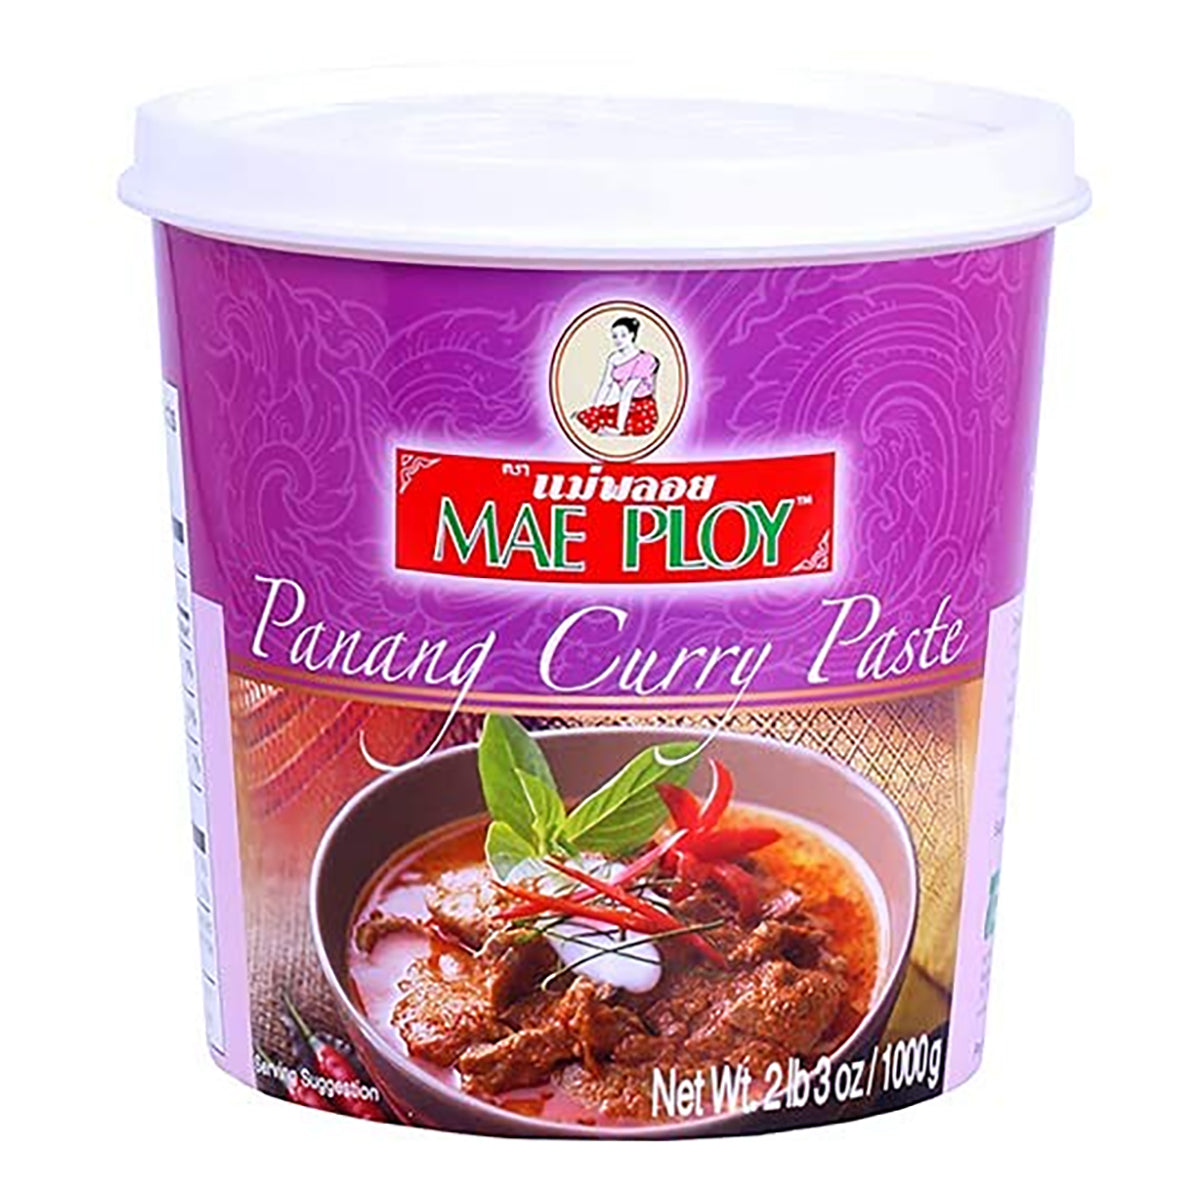 mae ploy panang curry paste- 35oz